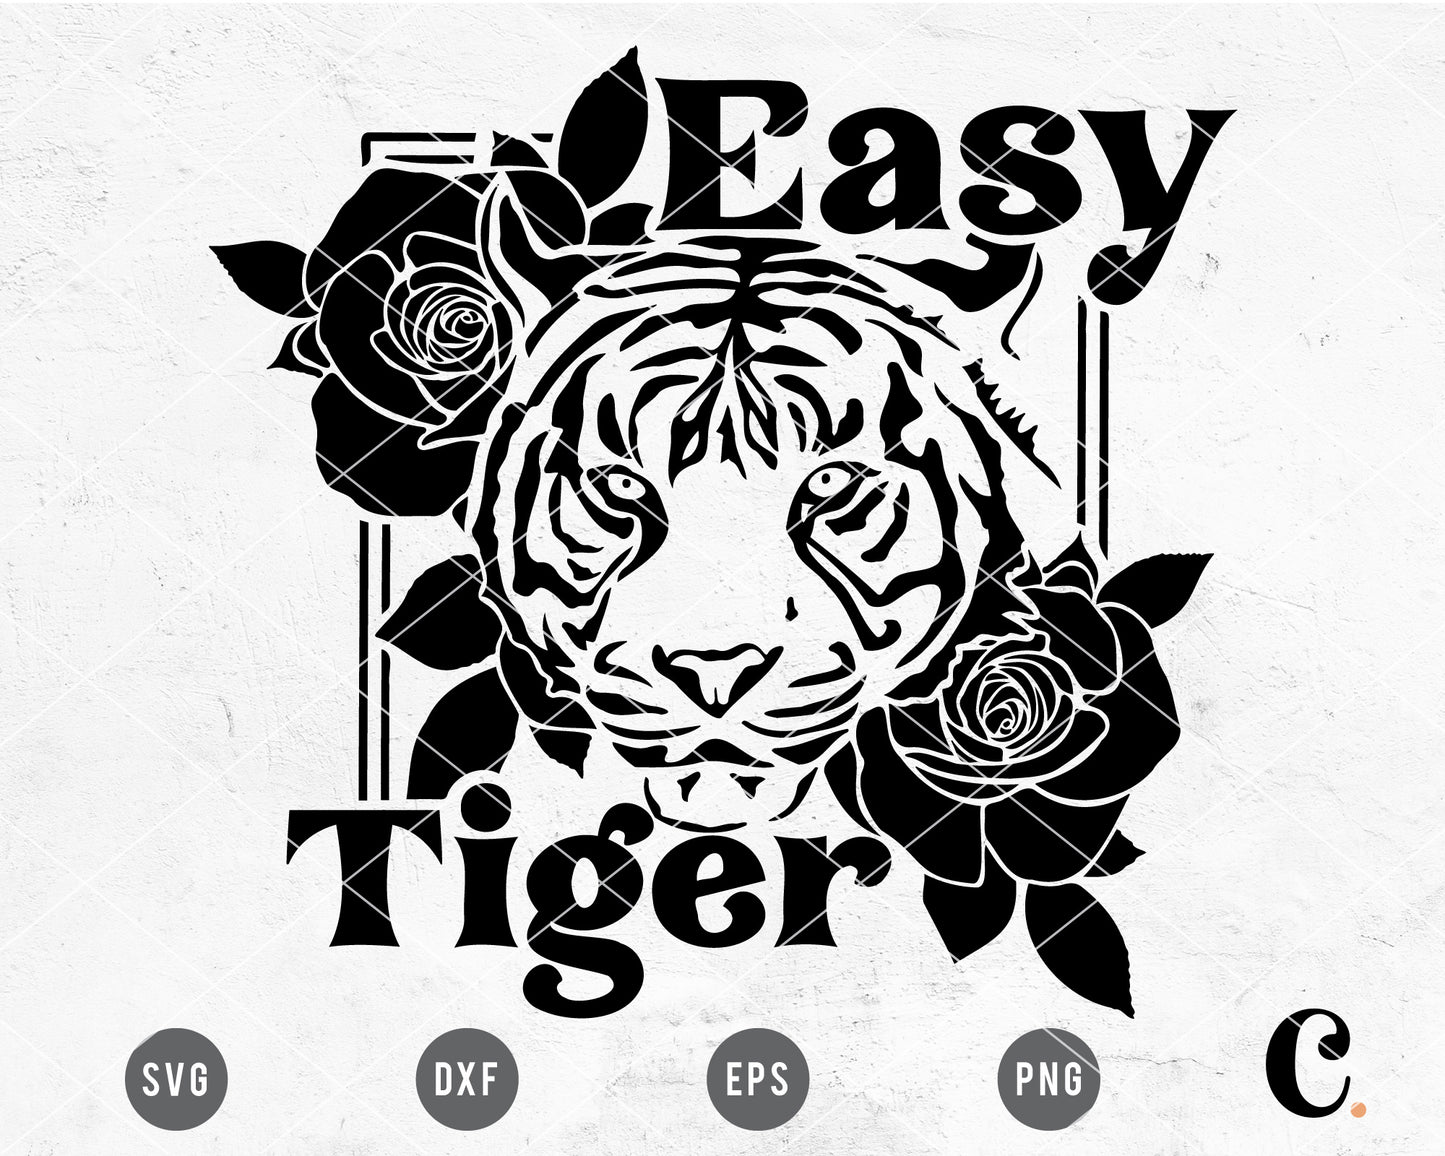 Easy Tiger SVG